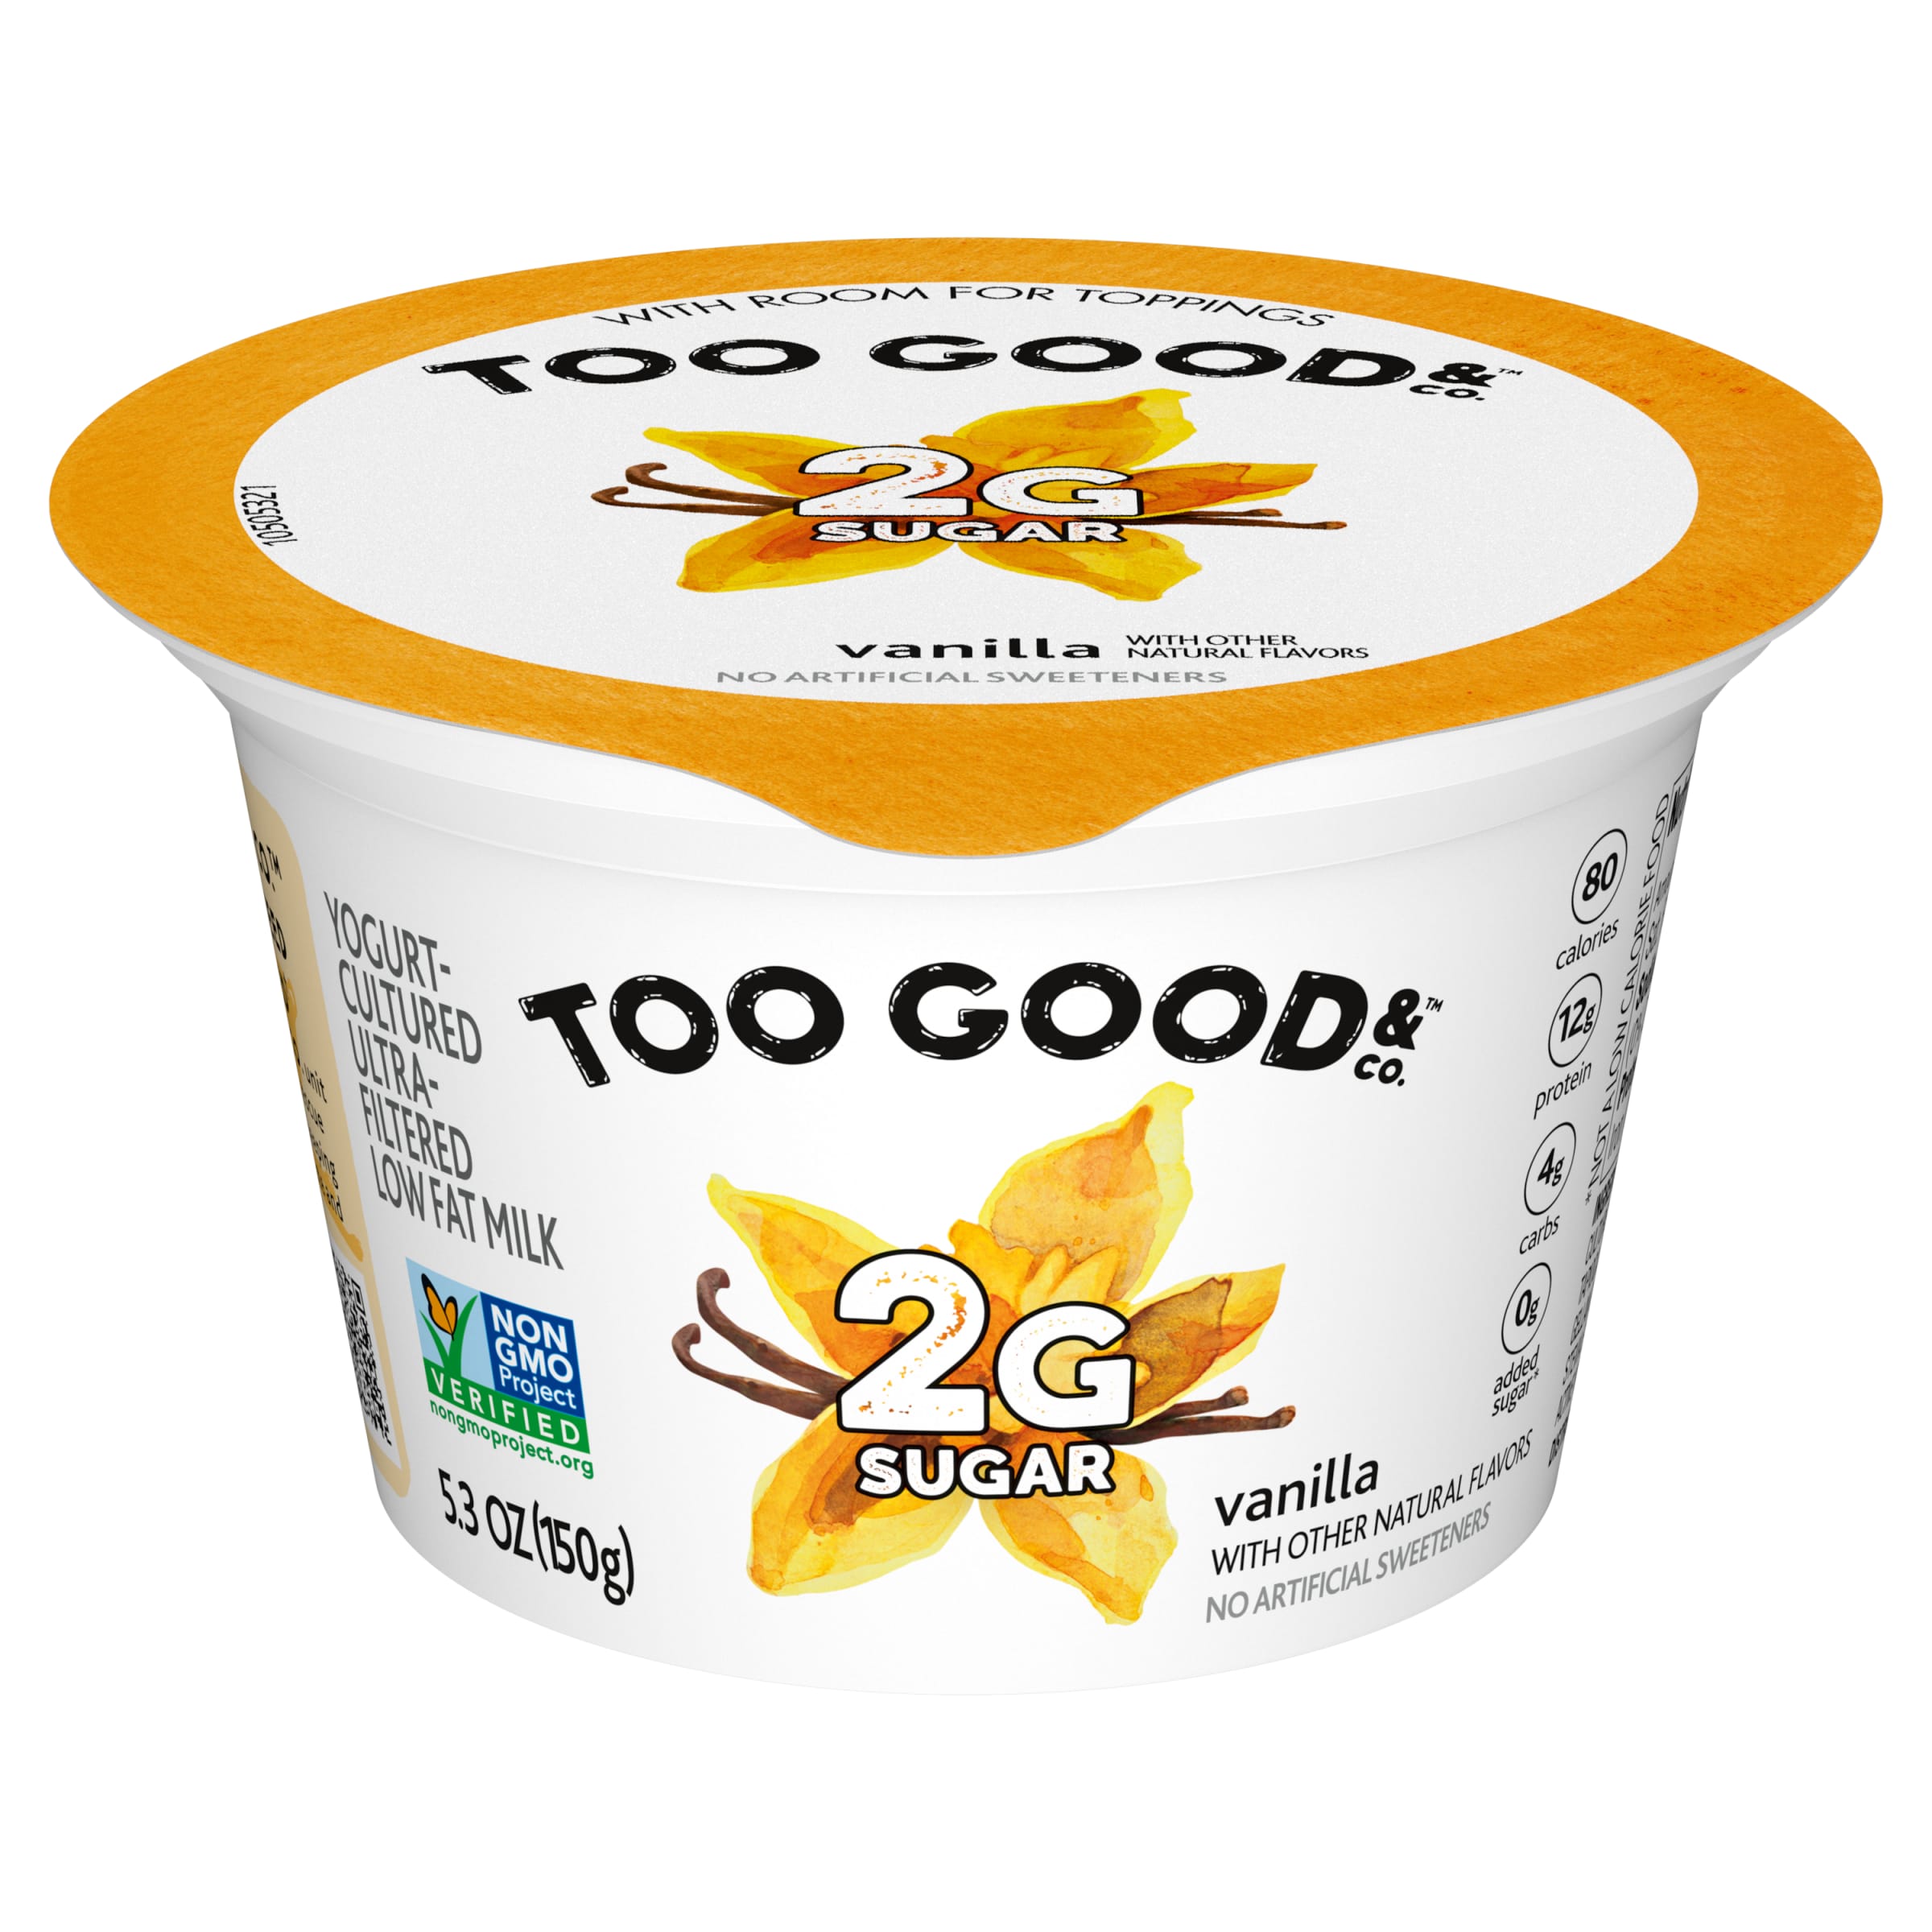 Too Good & Co. Lower Sugar Vanilla Flavored Low Fat Greek Yogurt Cultured Product, 5.3 oz - image 1 of 11